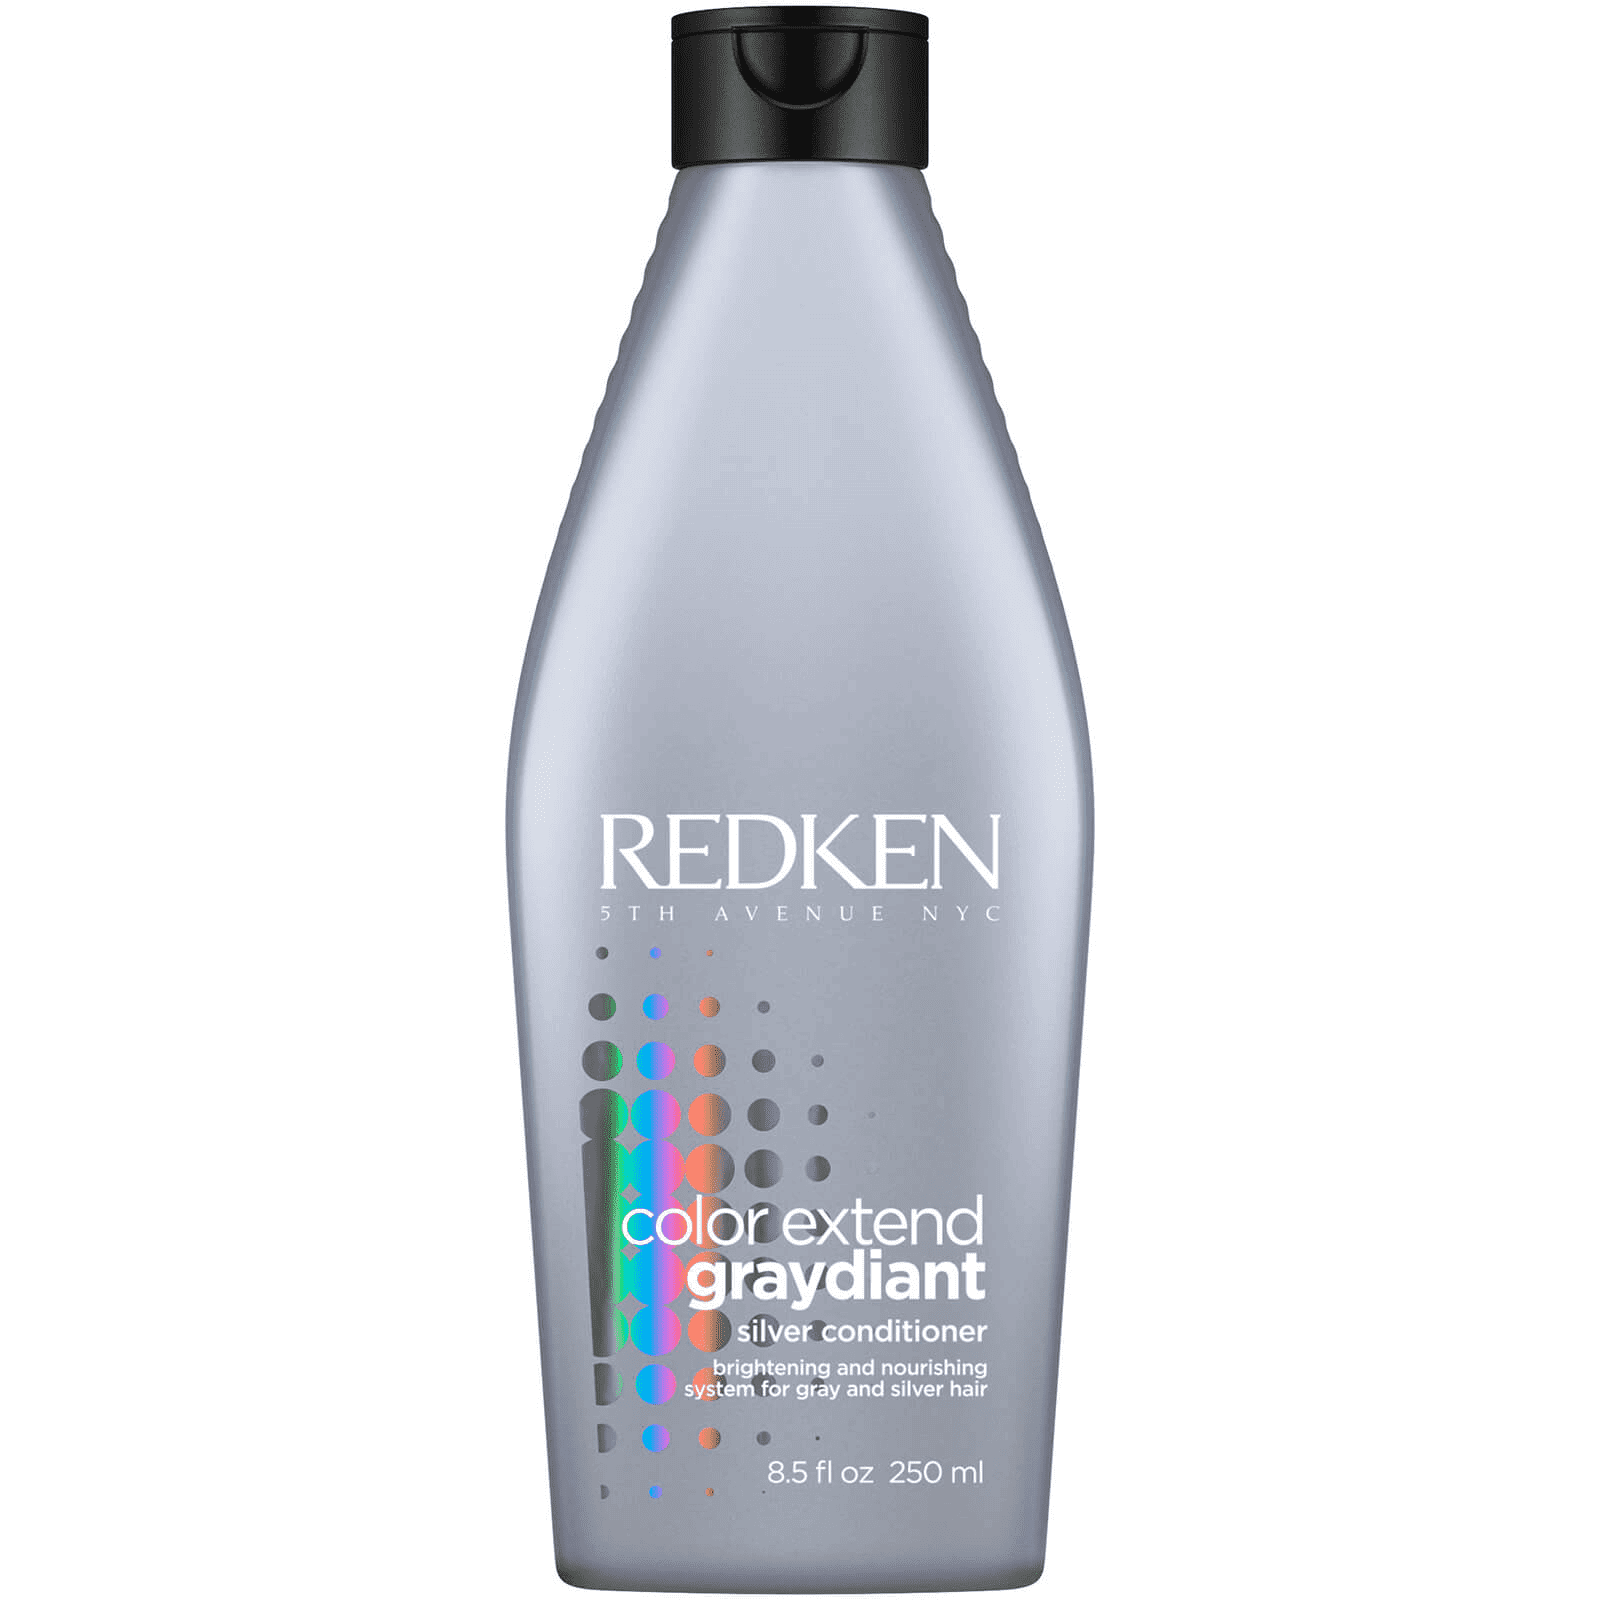 Redken - Color Extend Graydiant - Conditioner - 300ml - ProCare Outlet by Redken